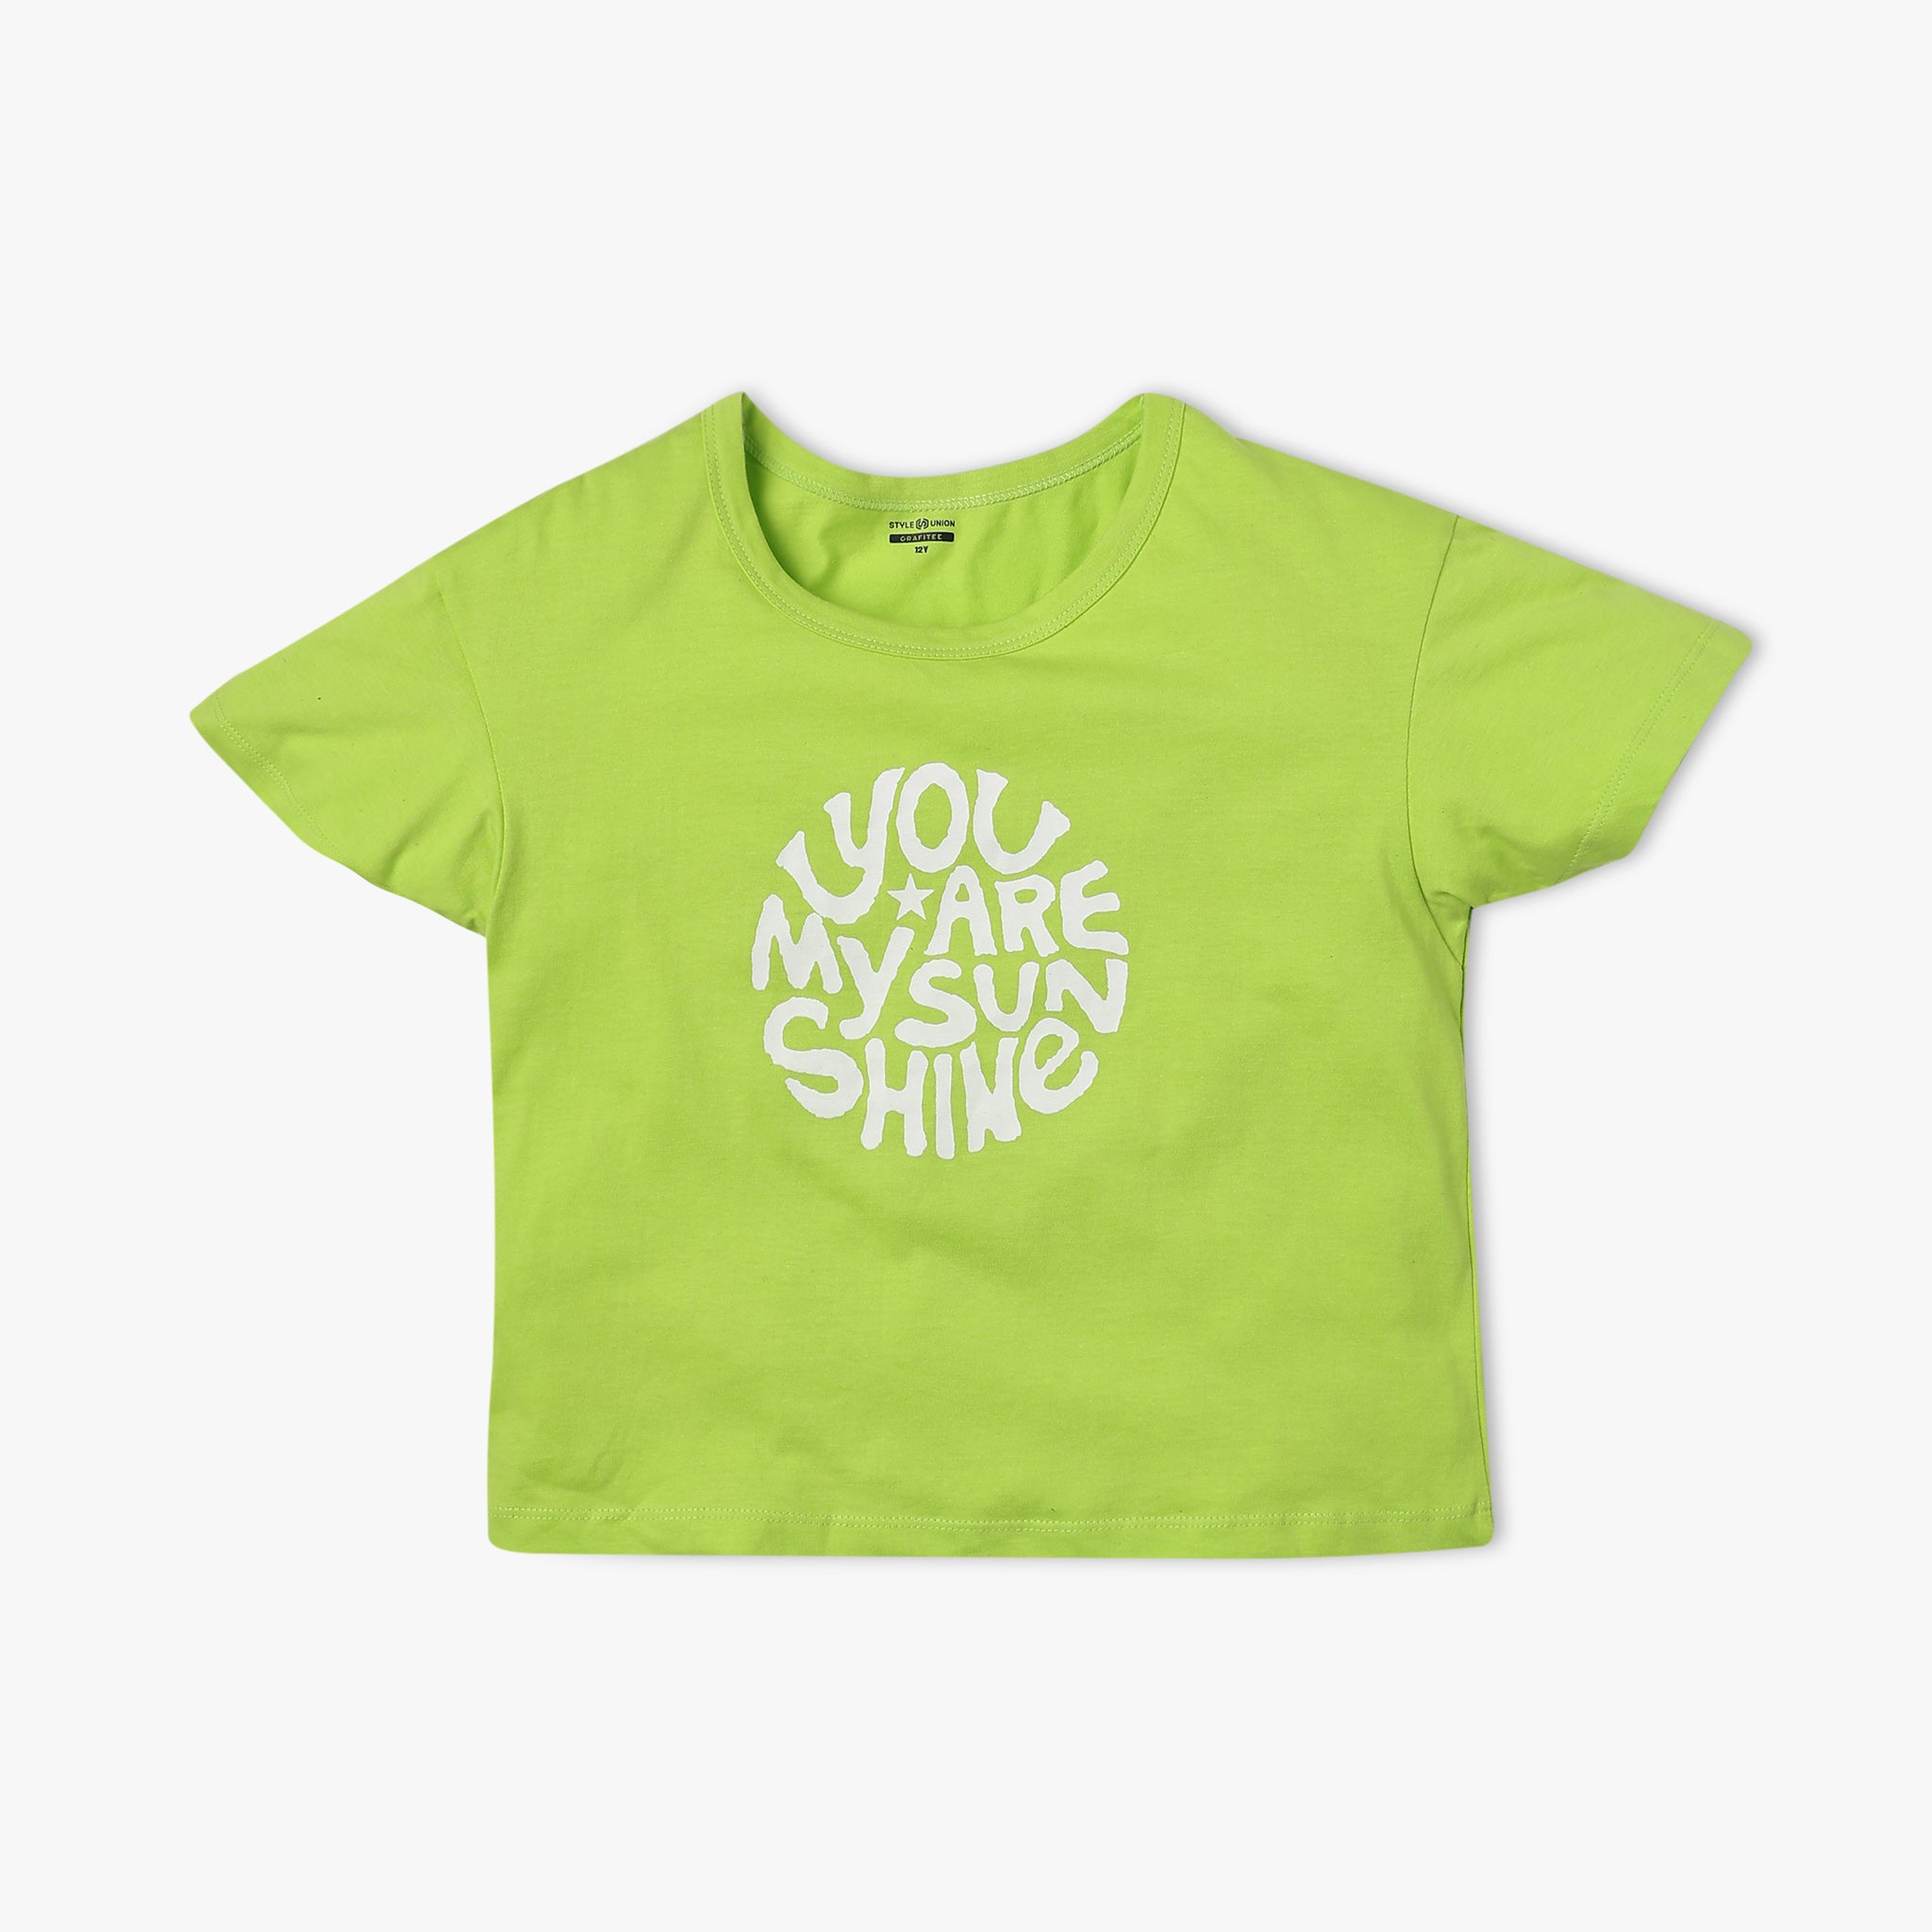 Kids Graphic T-Shirts.